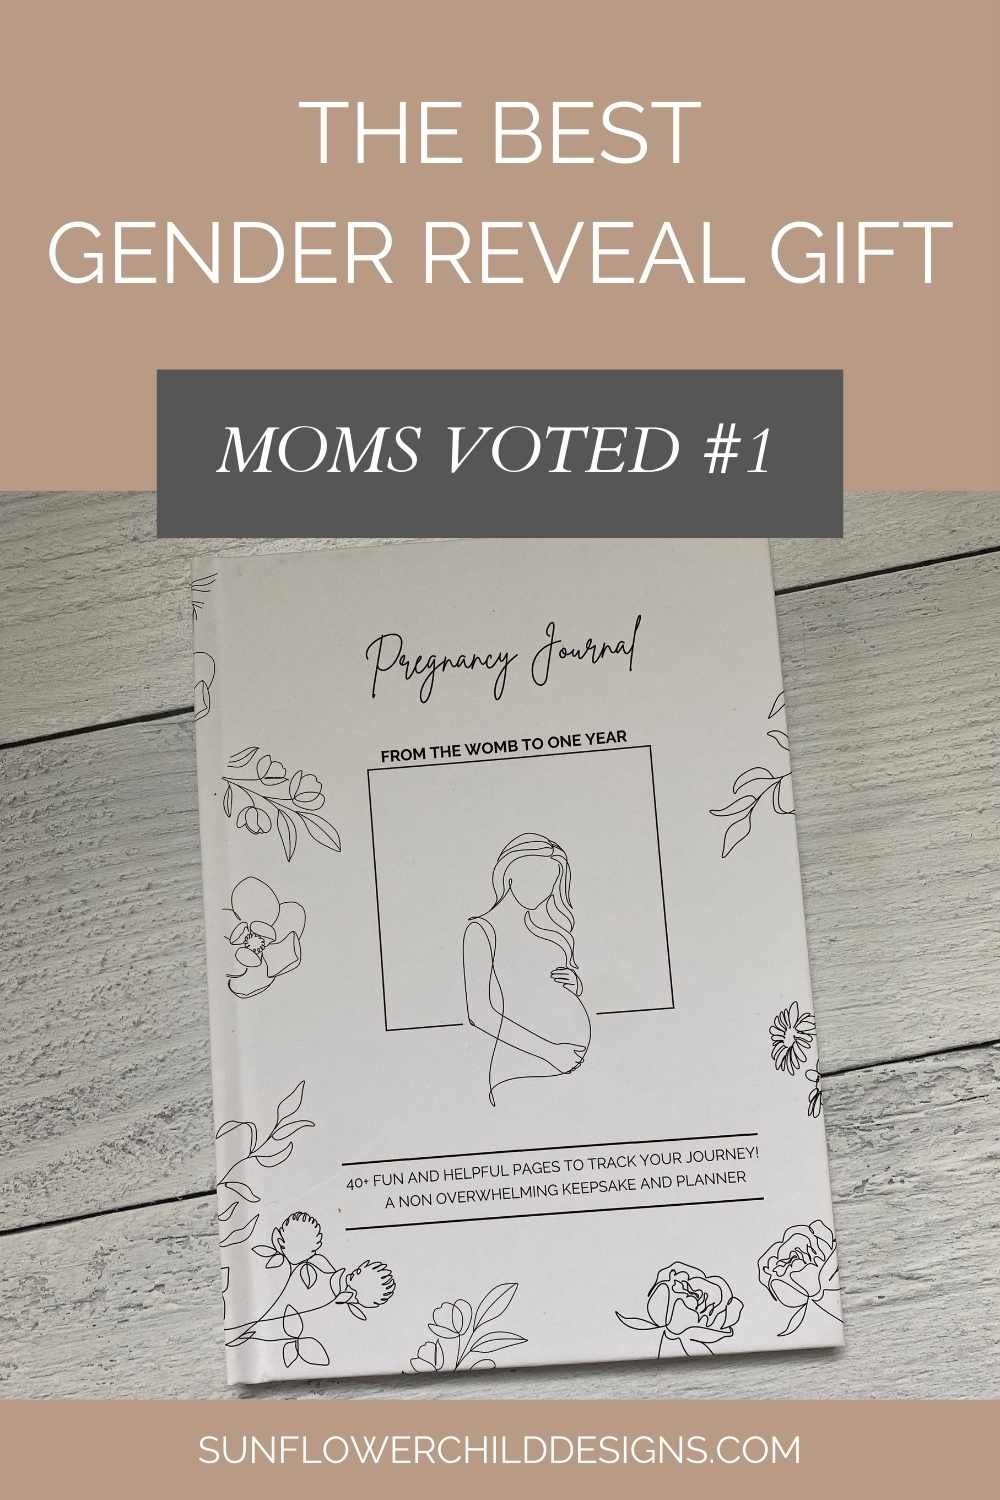 The Best Gender Reveal Gift